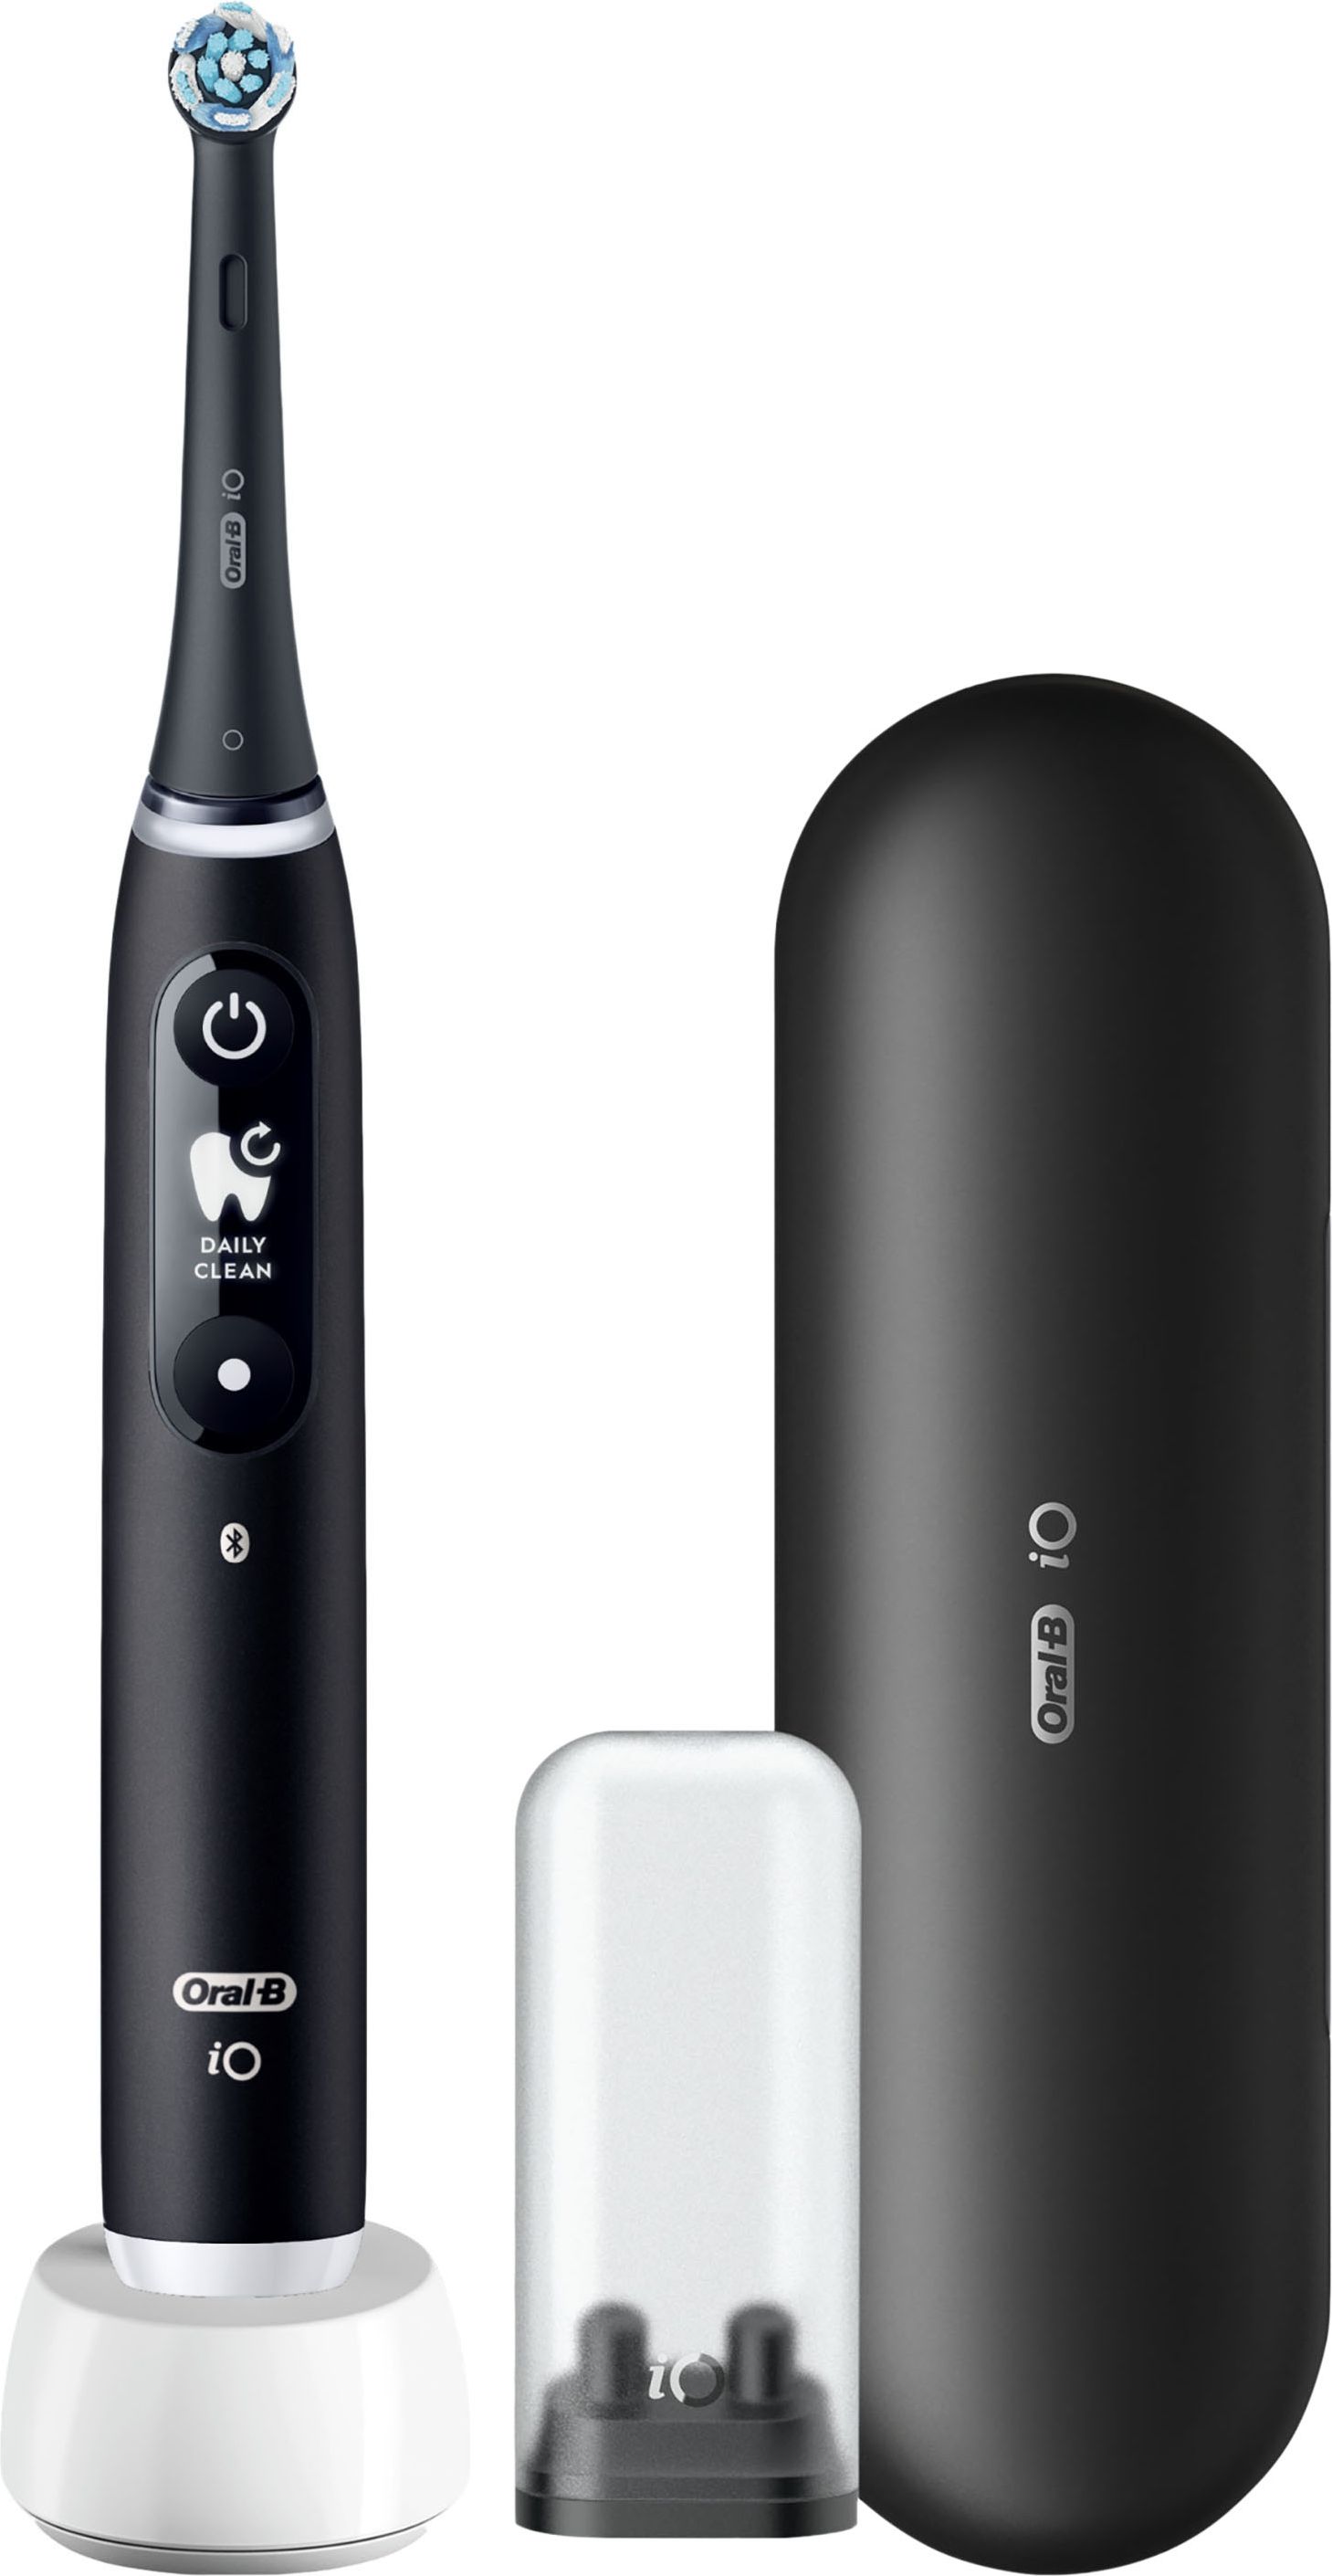 Oral B iO 6 Electric Toothbrush - Black, Black